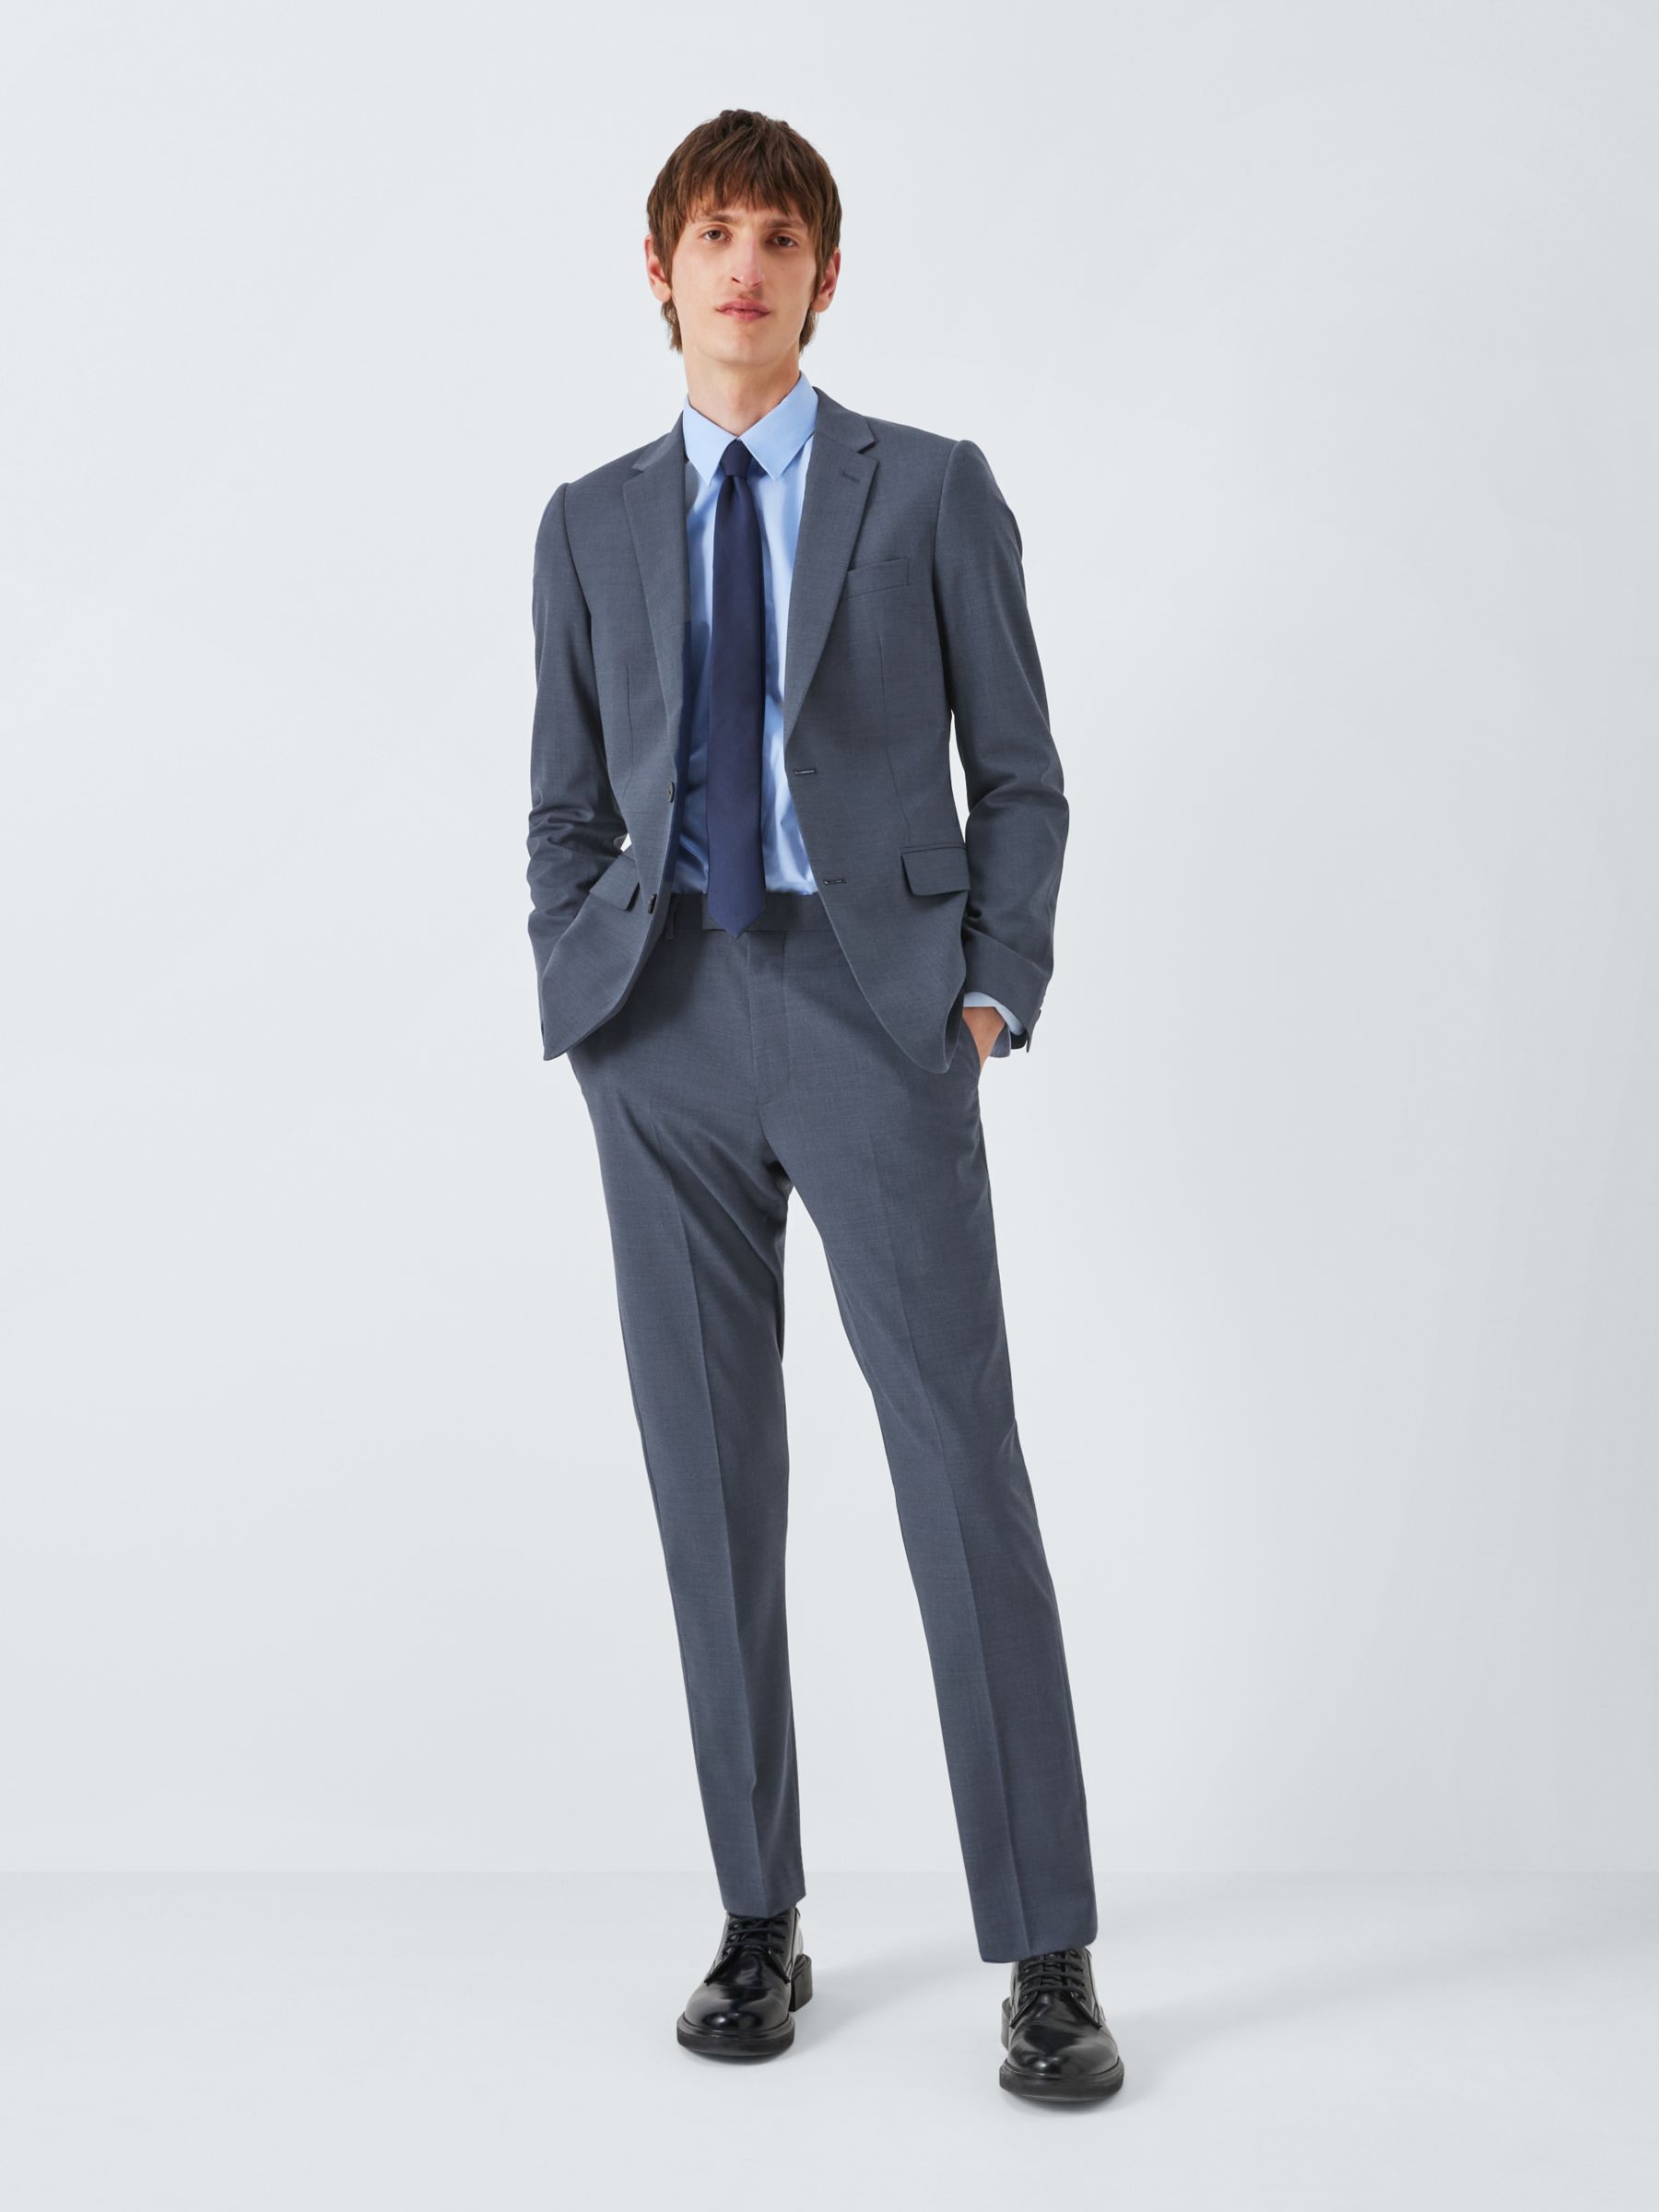 Kin Leo Wool Blend Slim Fit Trousers, Airforce Blue, 36S